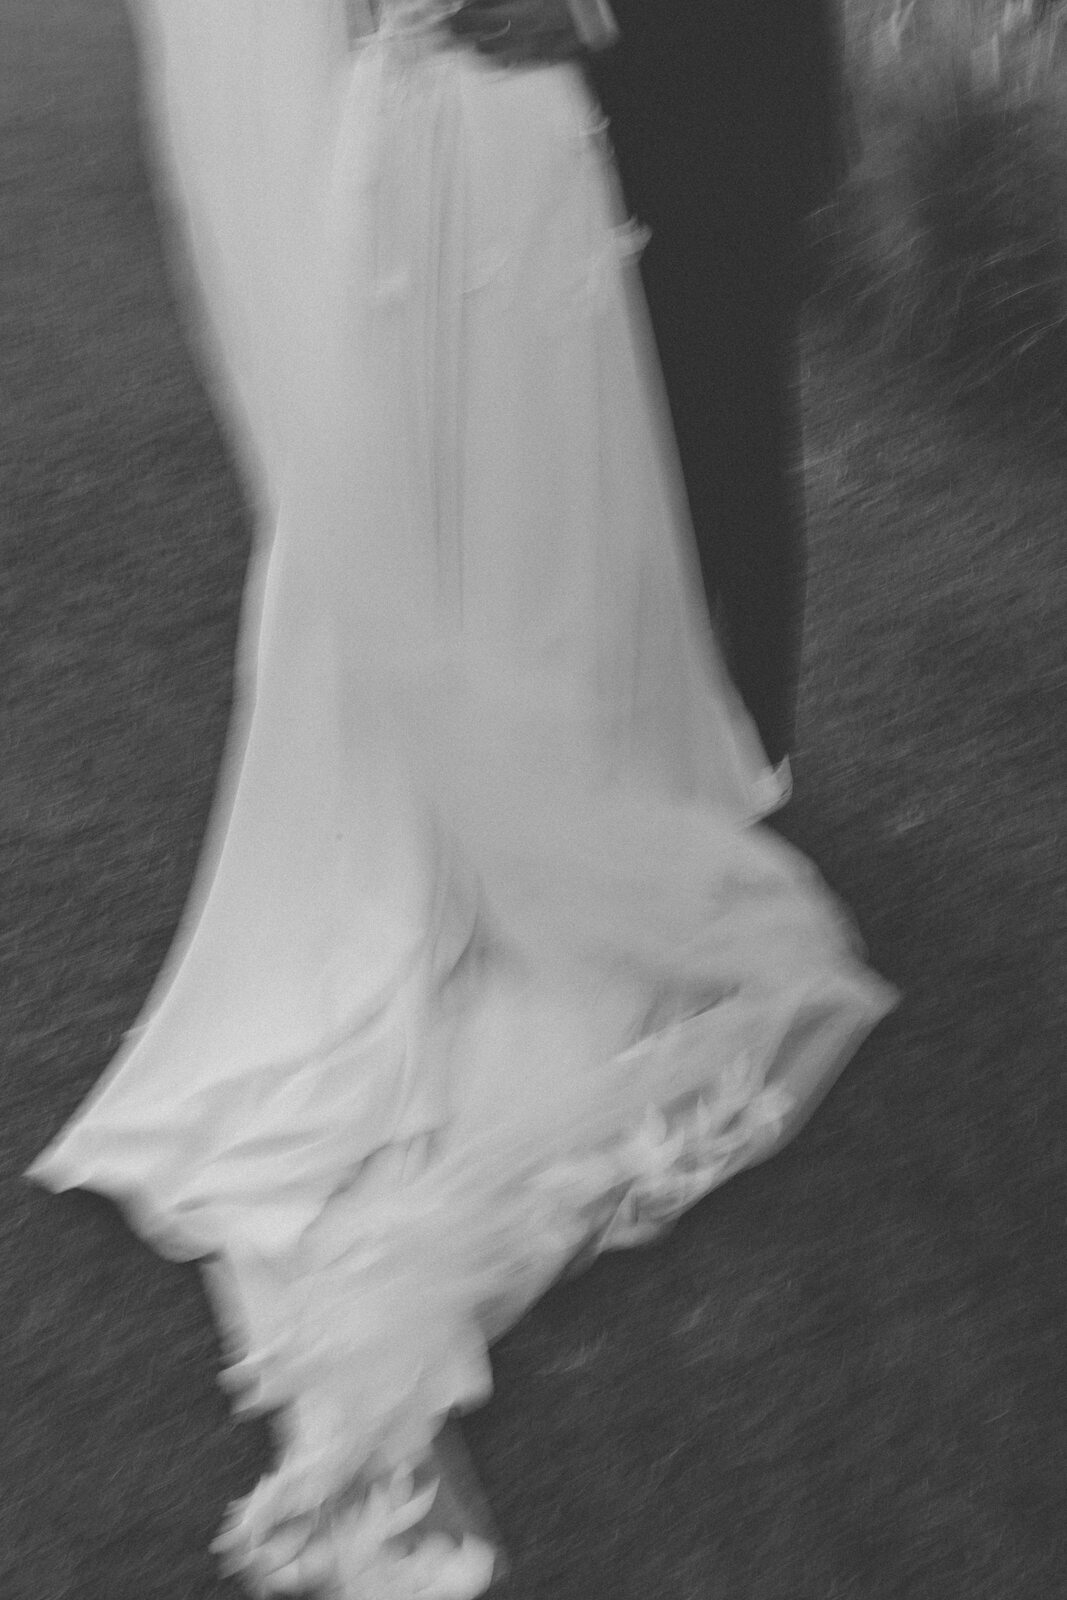 foto do vestido de noiva